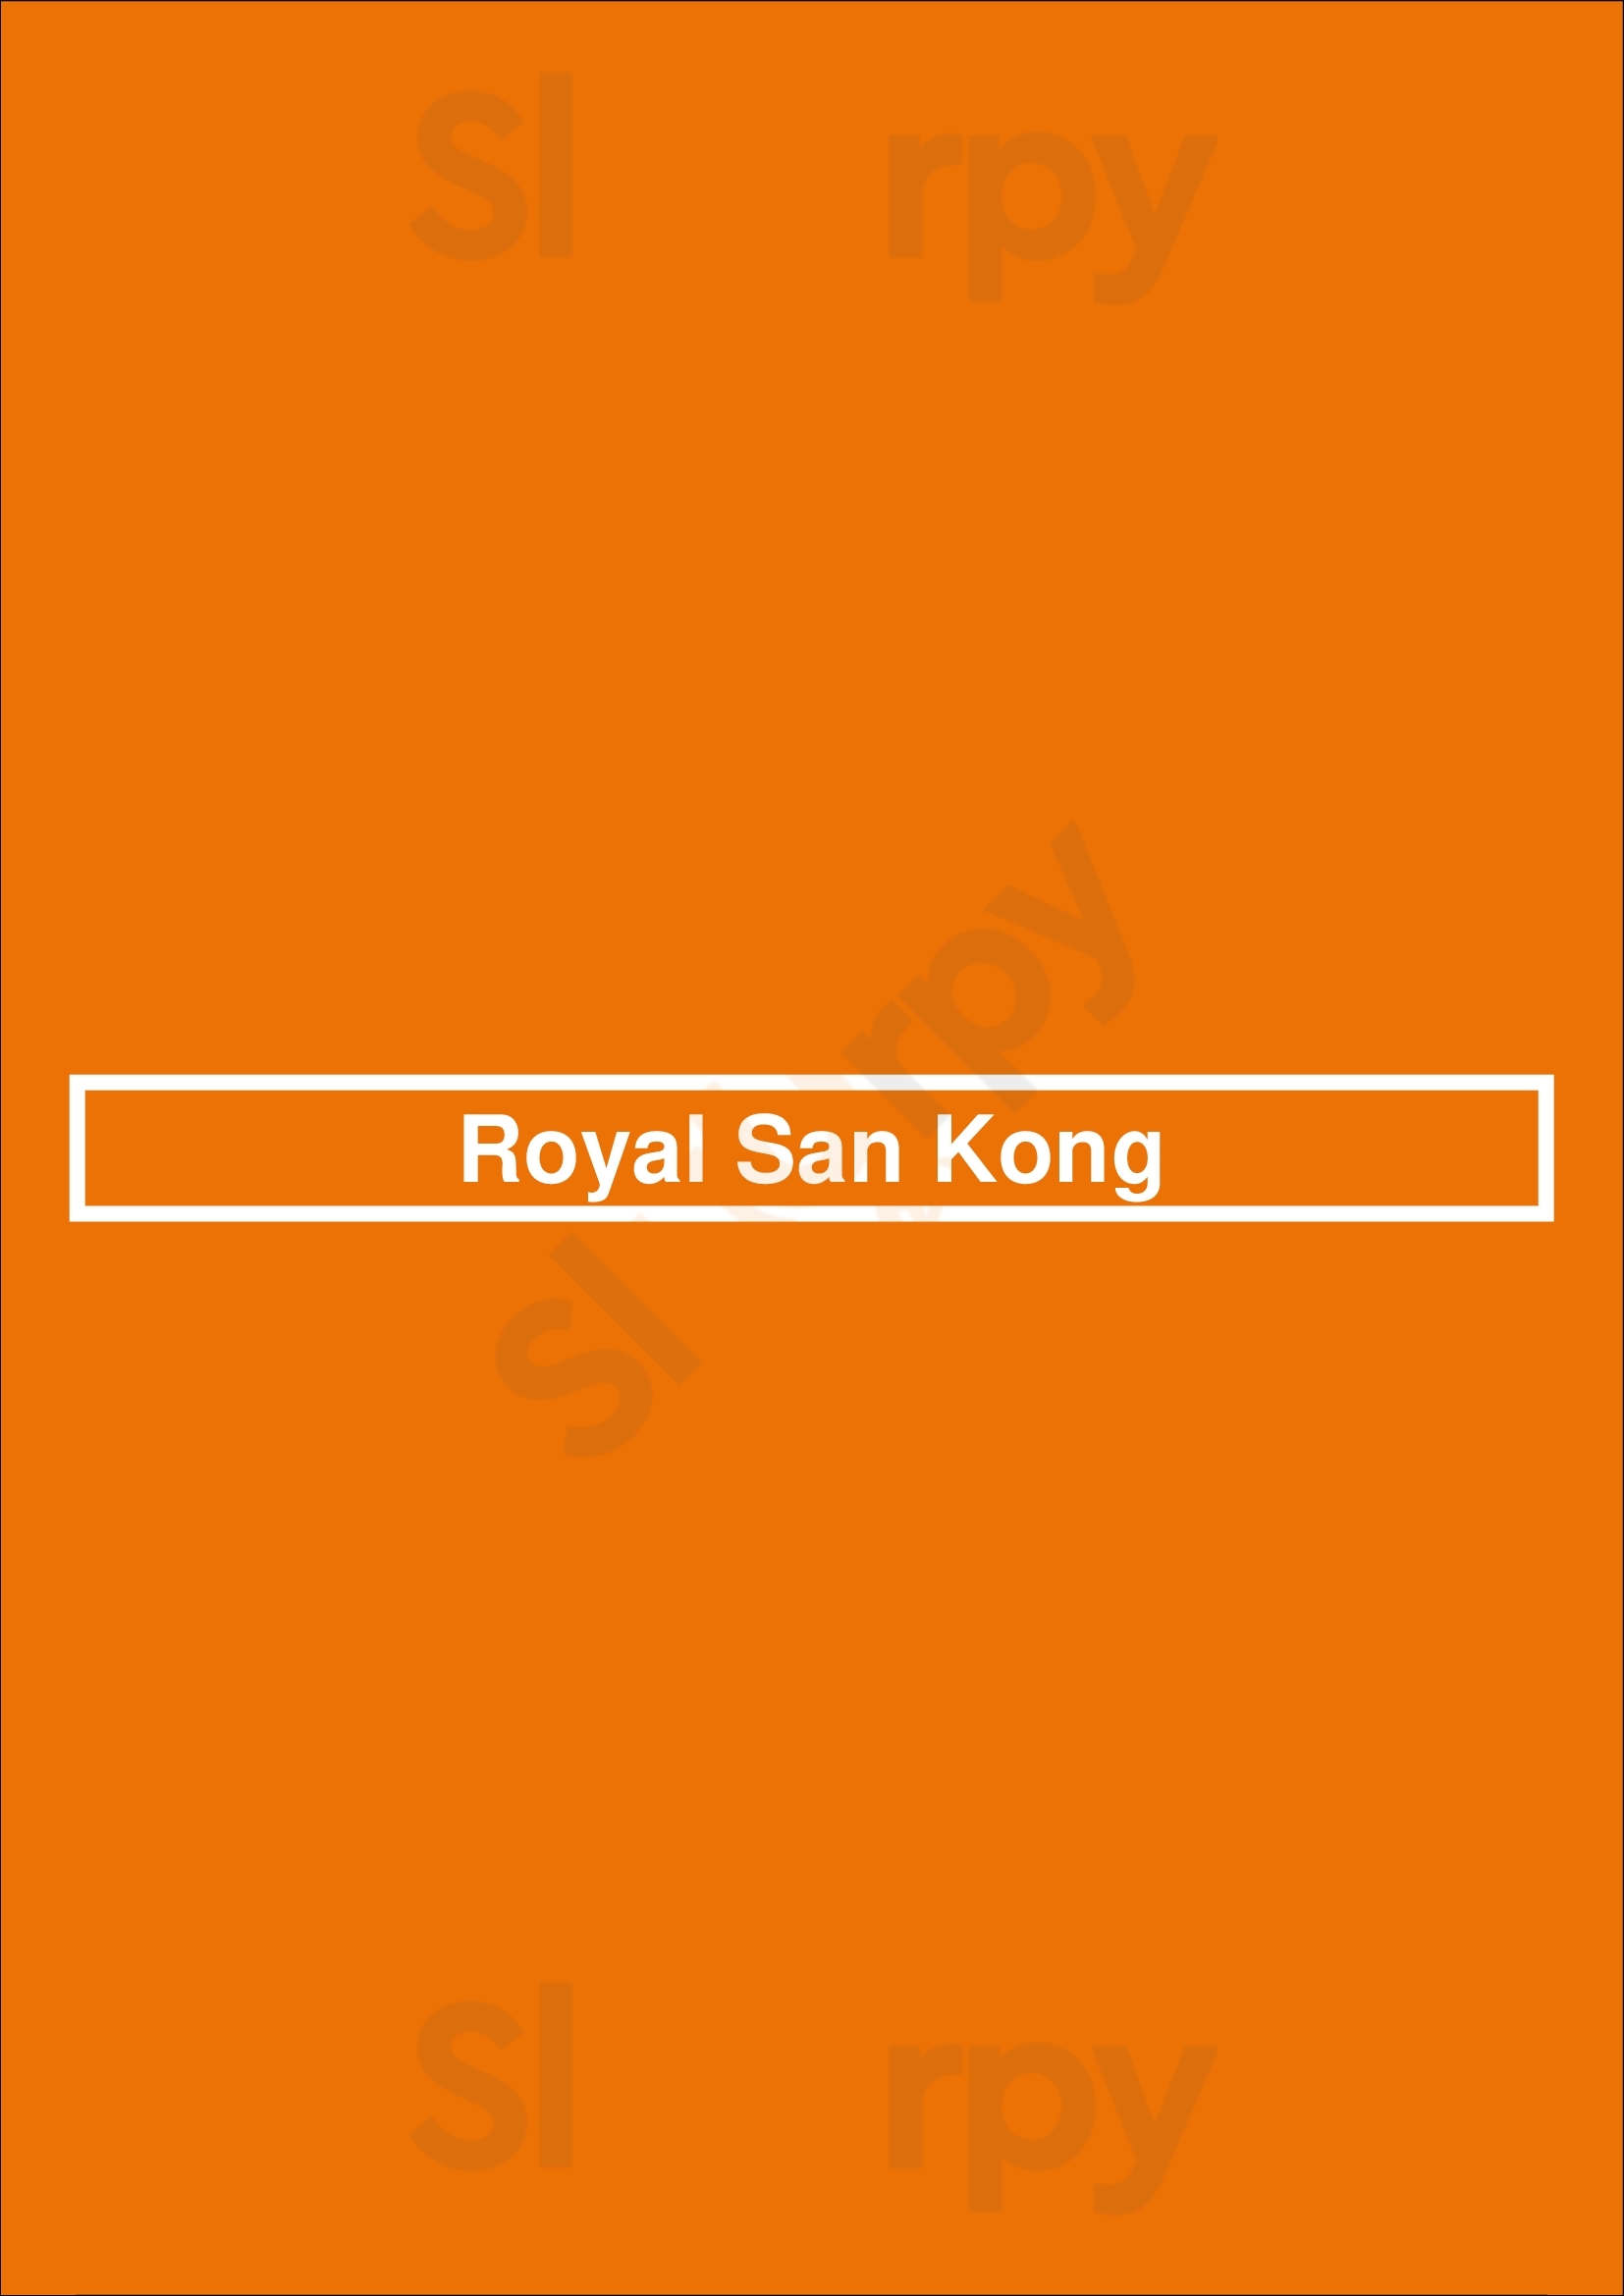 Royal San Kong Amstelveen Menu - 1